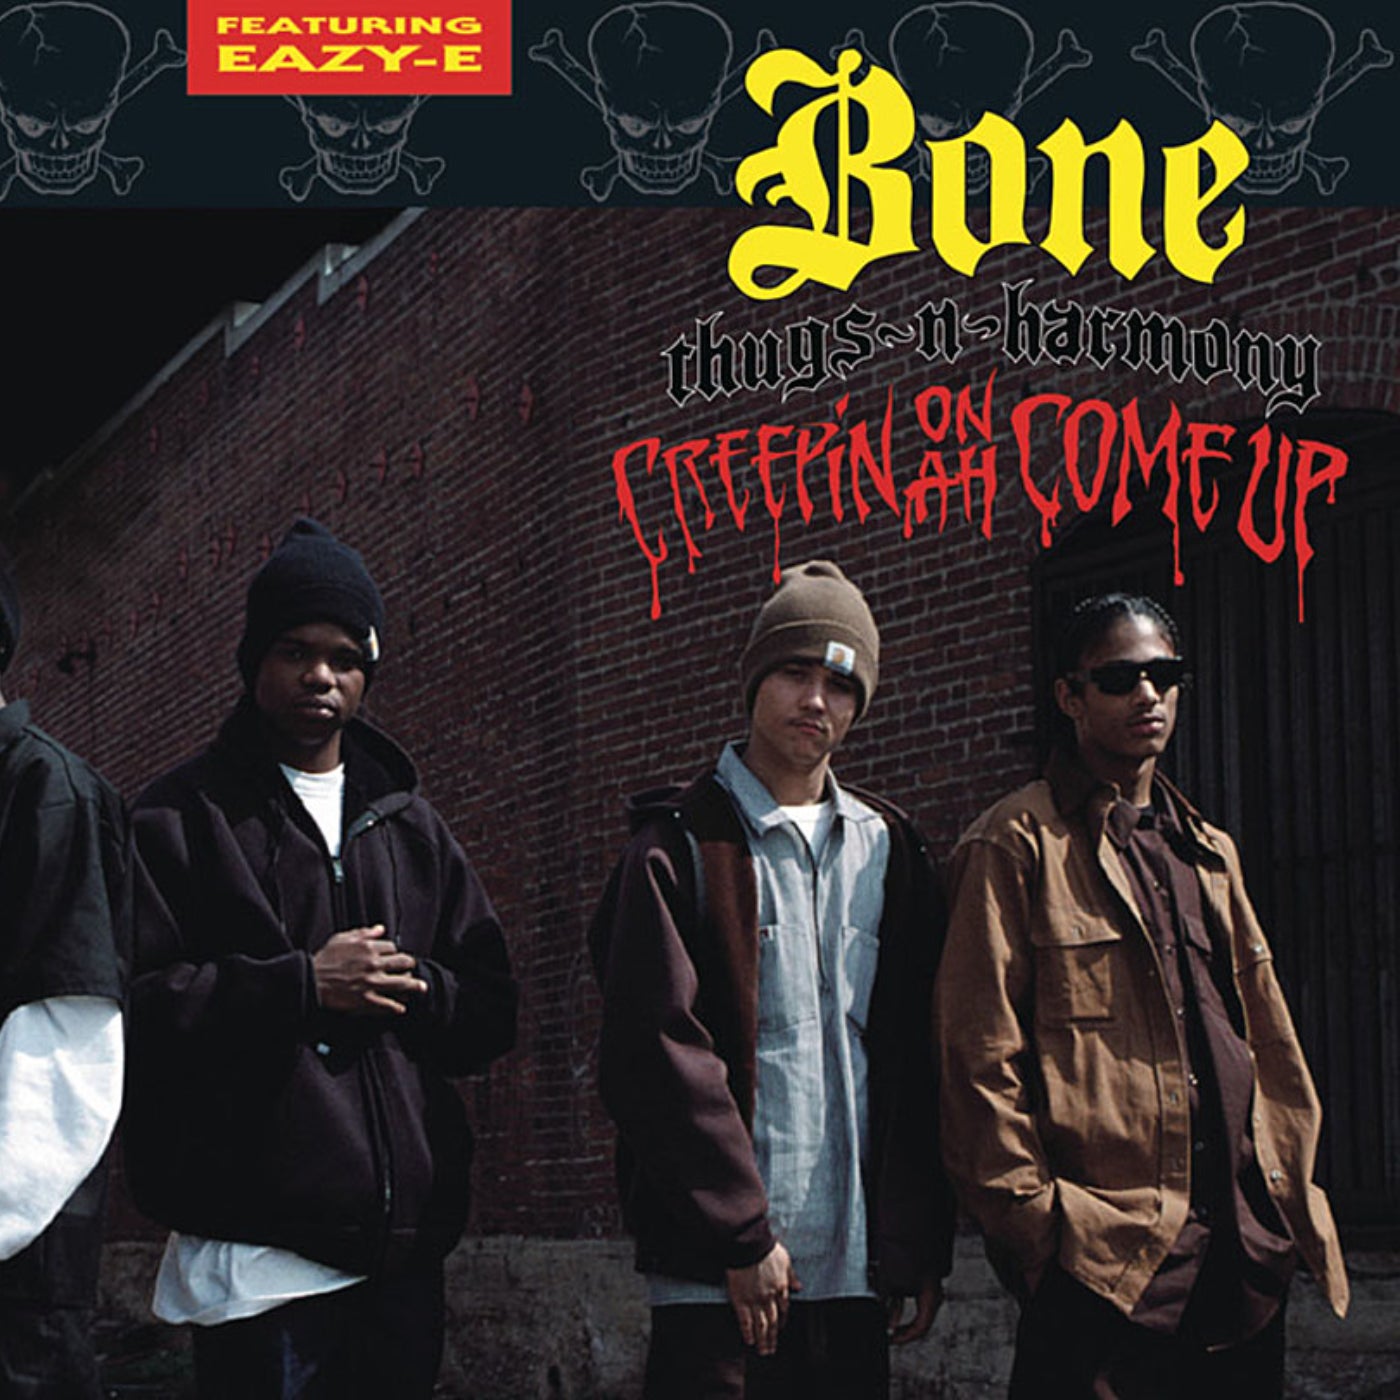 Creepin on Ah Come Up by Bone Thugs-N-Harmony and Eazy-E on Beatsource